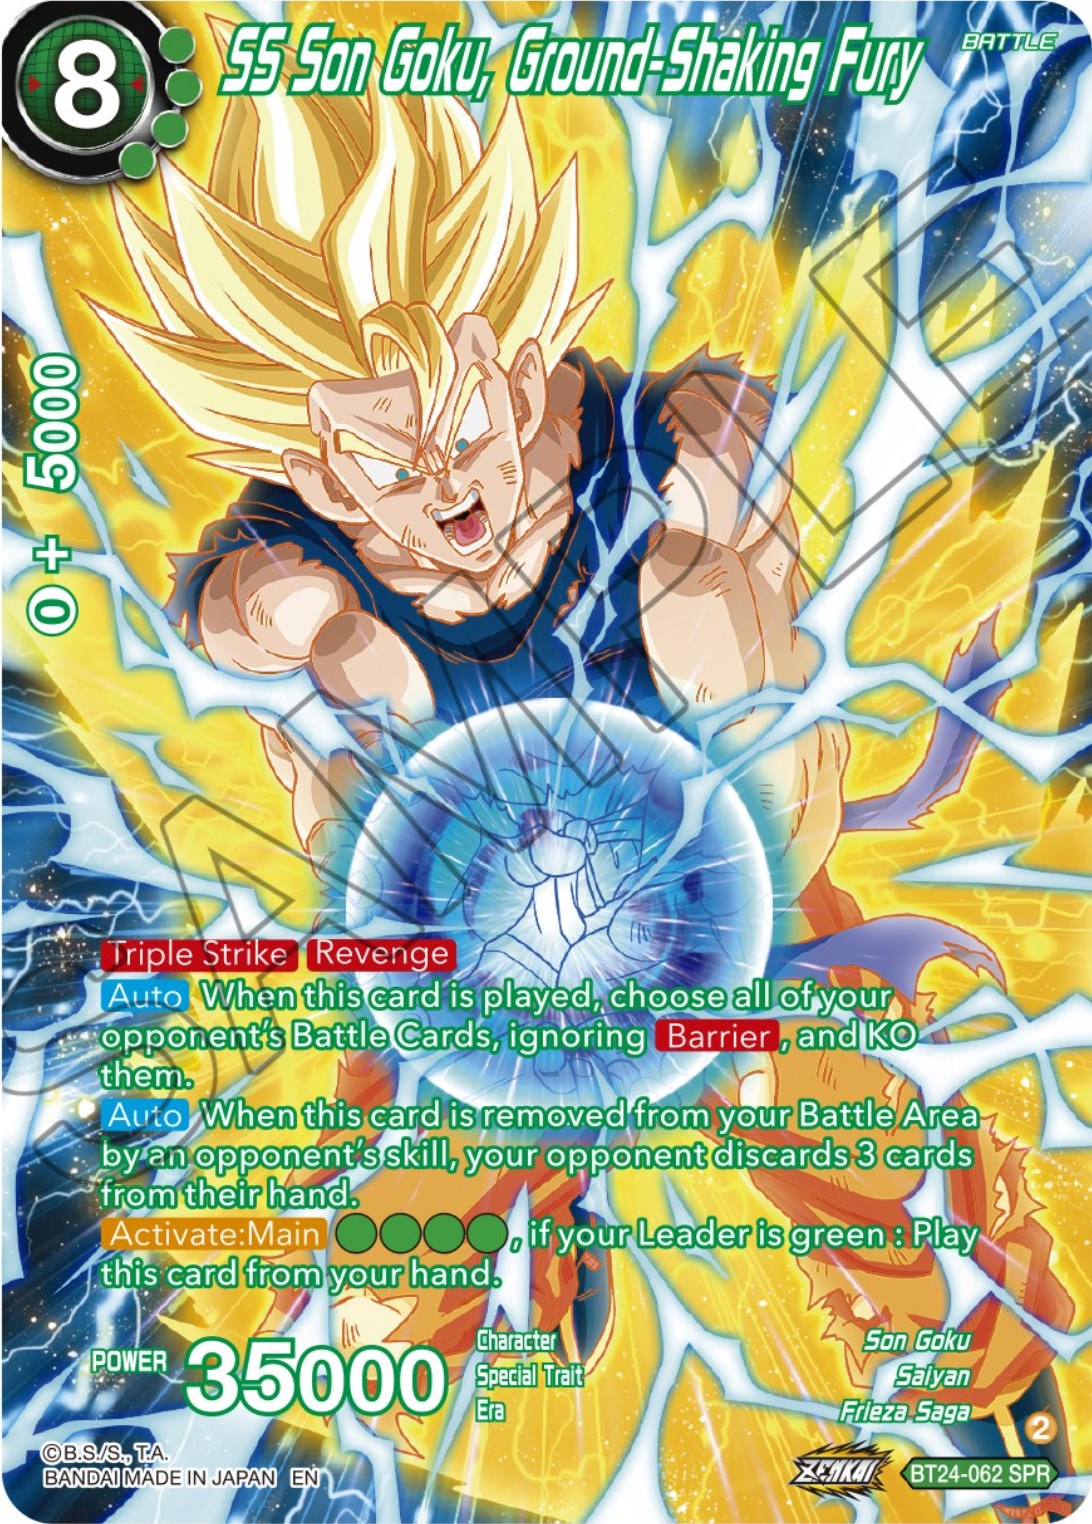 SS Son Goku, Ground-Shaking Fury (SPR) (BT24-062) [Beyond Generations] | Black Swamp Games